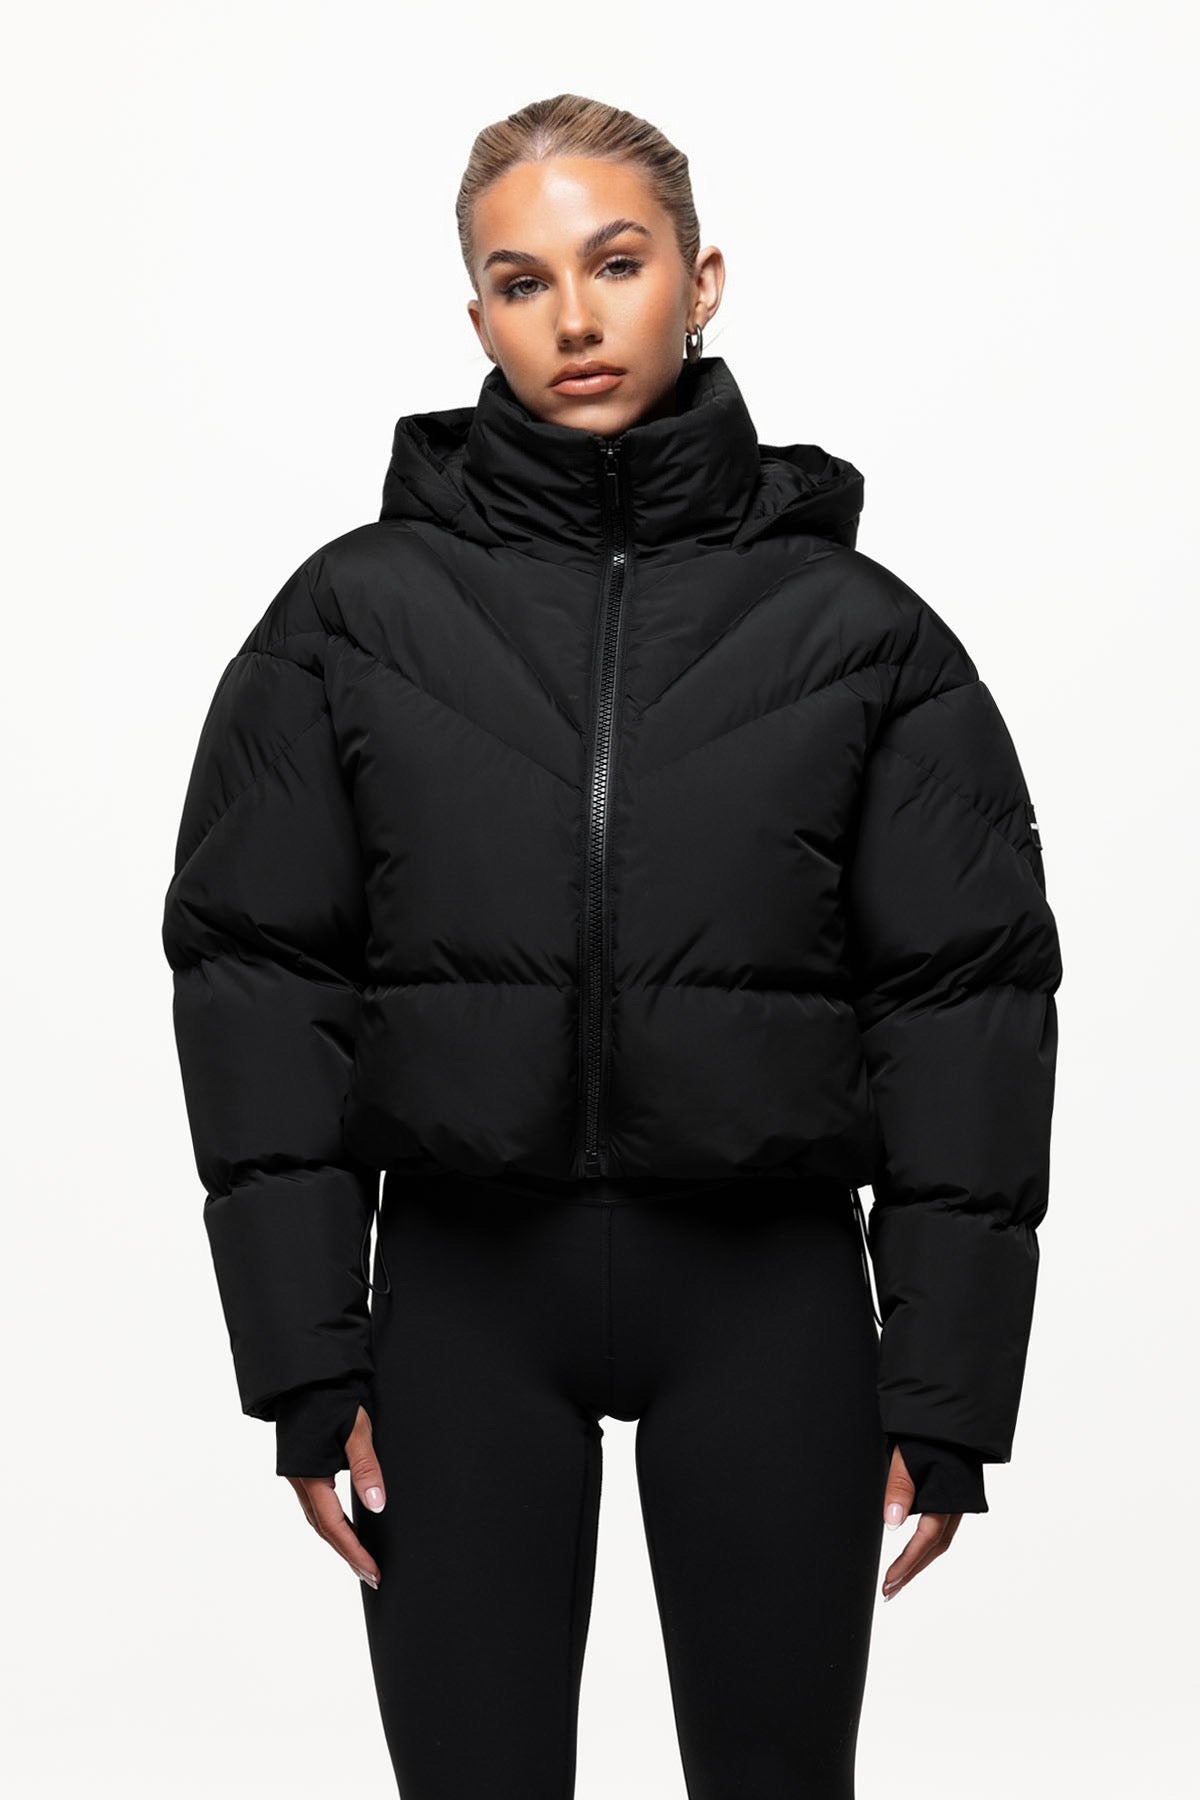 Alps Faux Fur Black Puffer Jacket